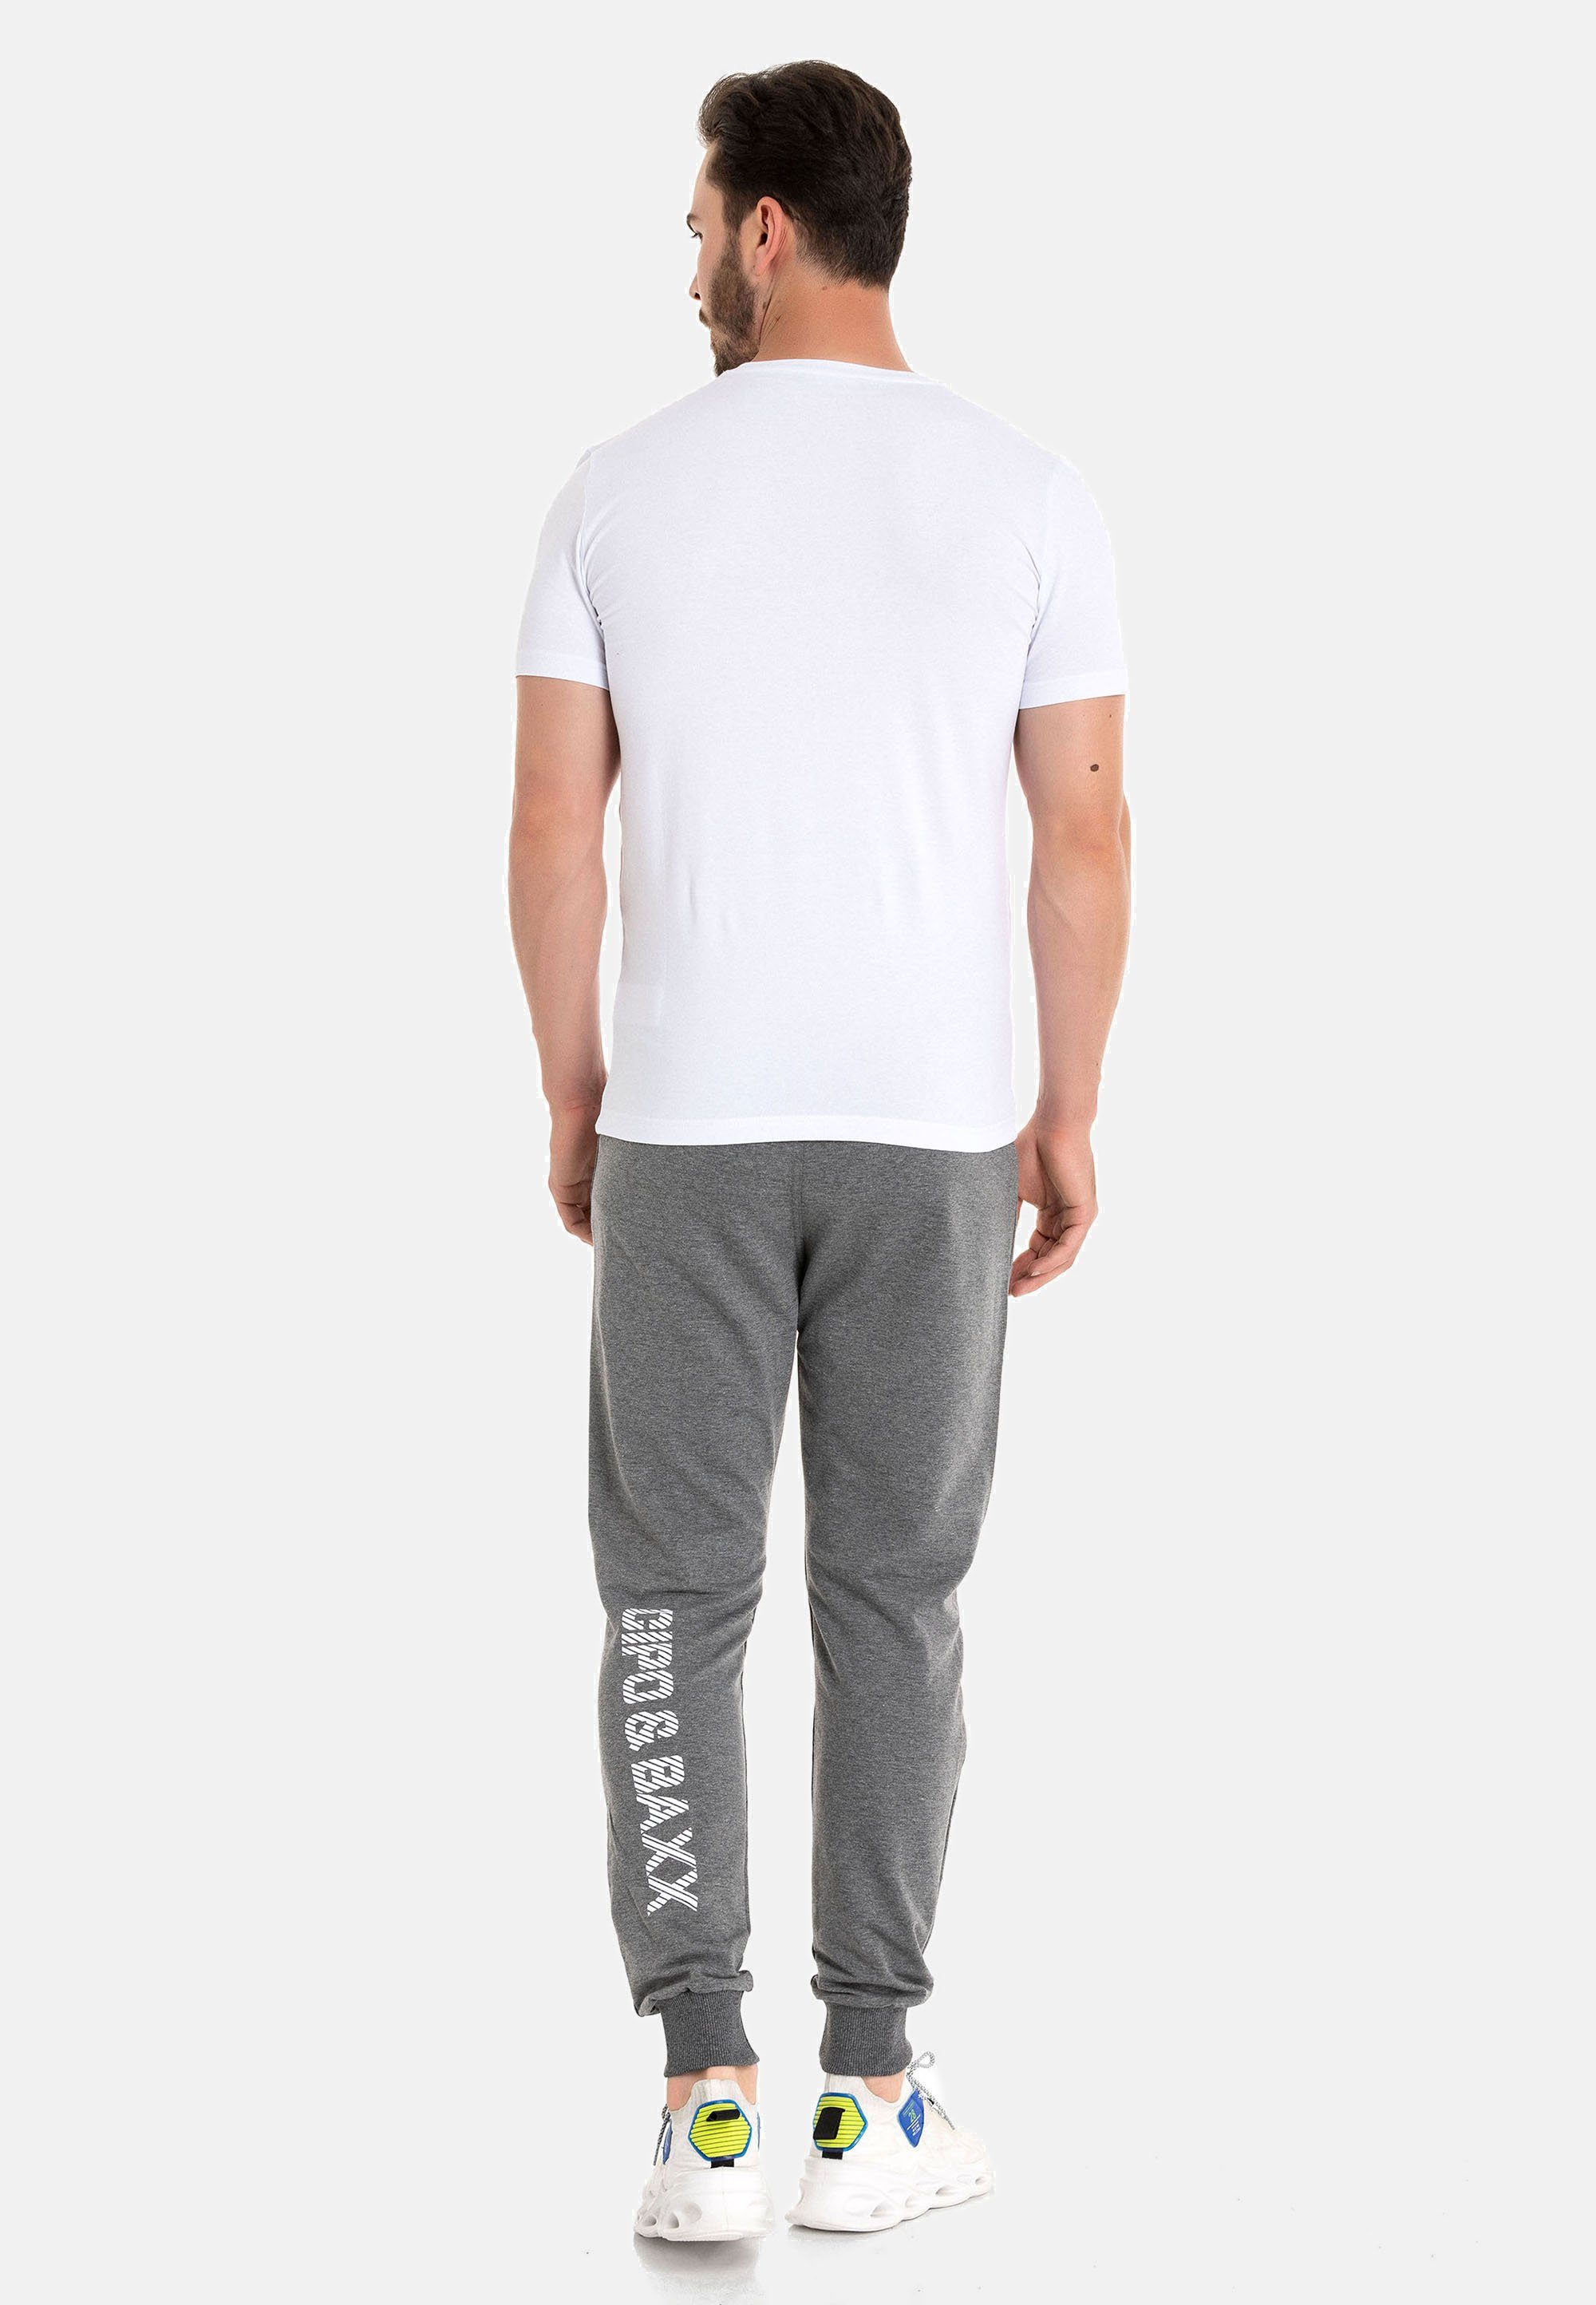 & Baxx Cipo trendigem mit T-Shirt Markenprint CT717 weiß